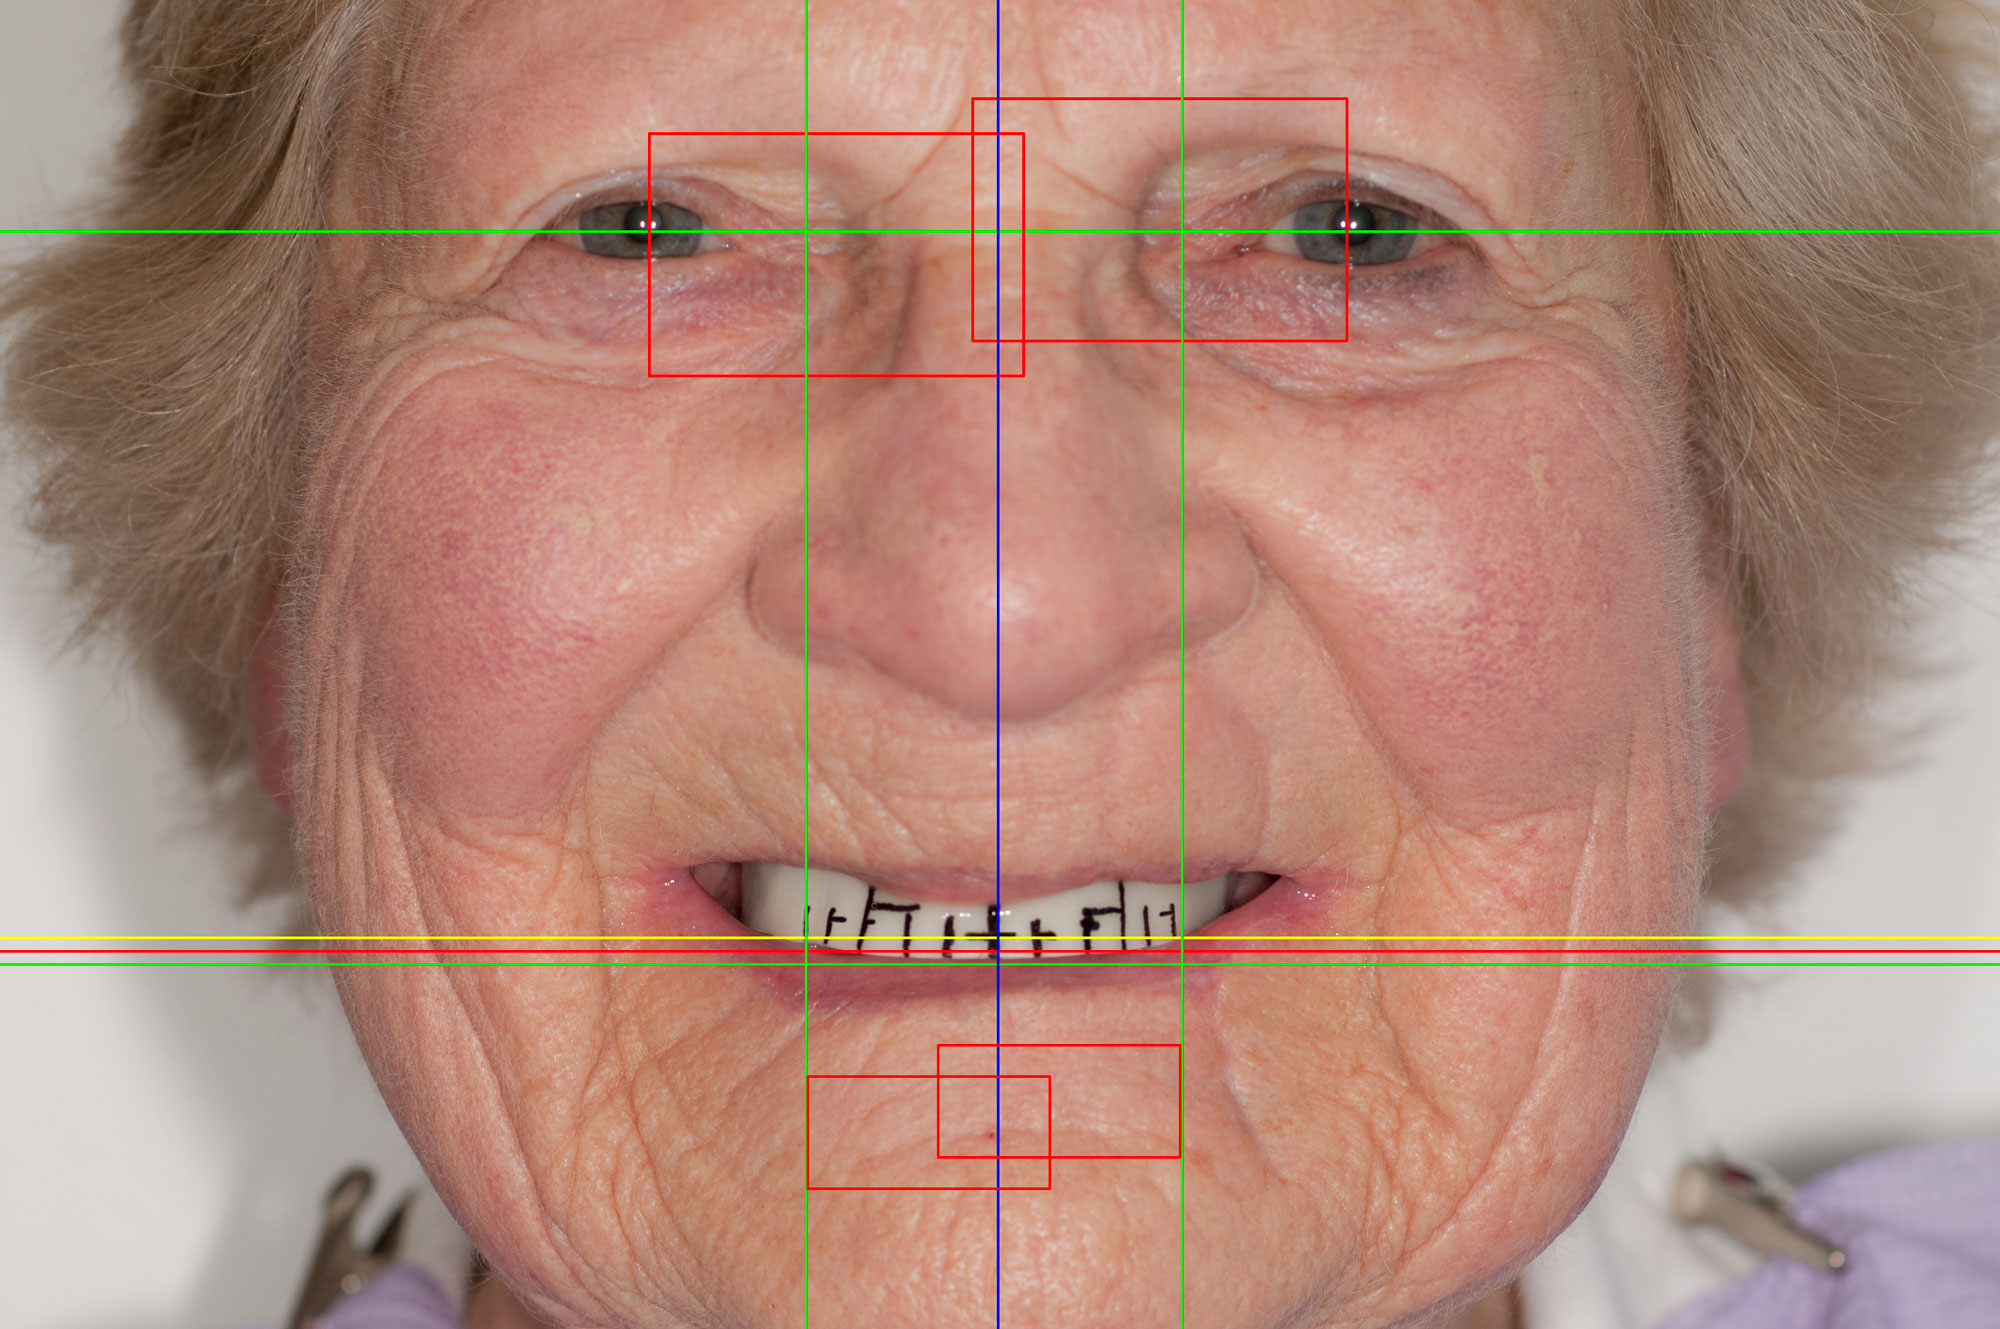 _RCW2588-Facial-Photo-analysis-vIIPhoto Realistic Diagnosis.jpg